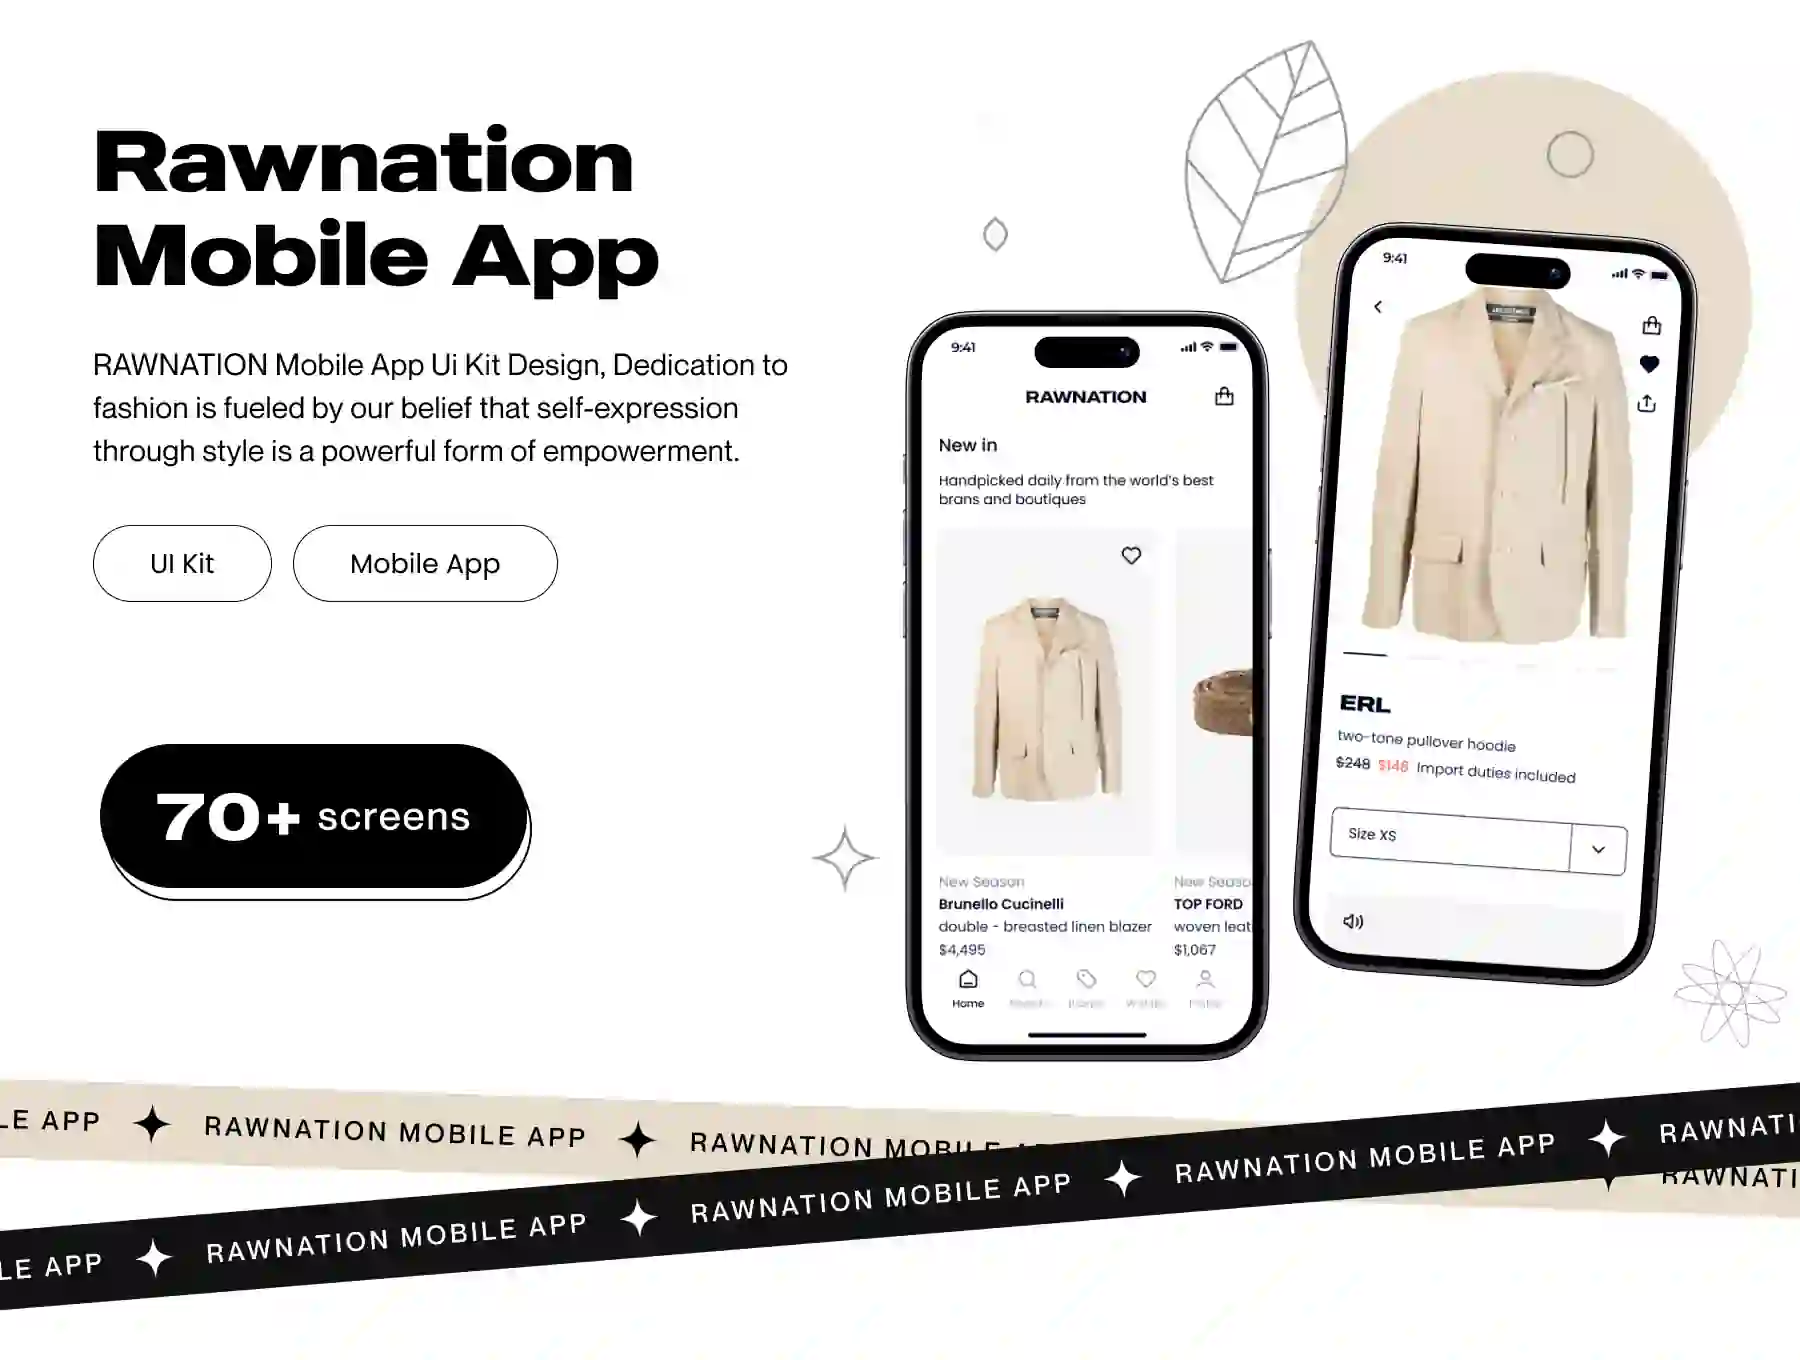 RAWNATION Mobile App Ui Kit Design